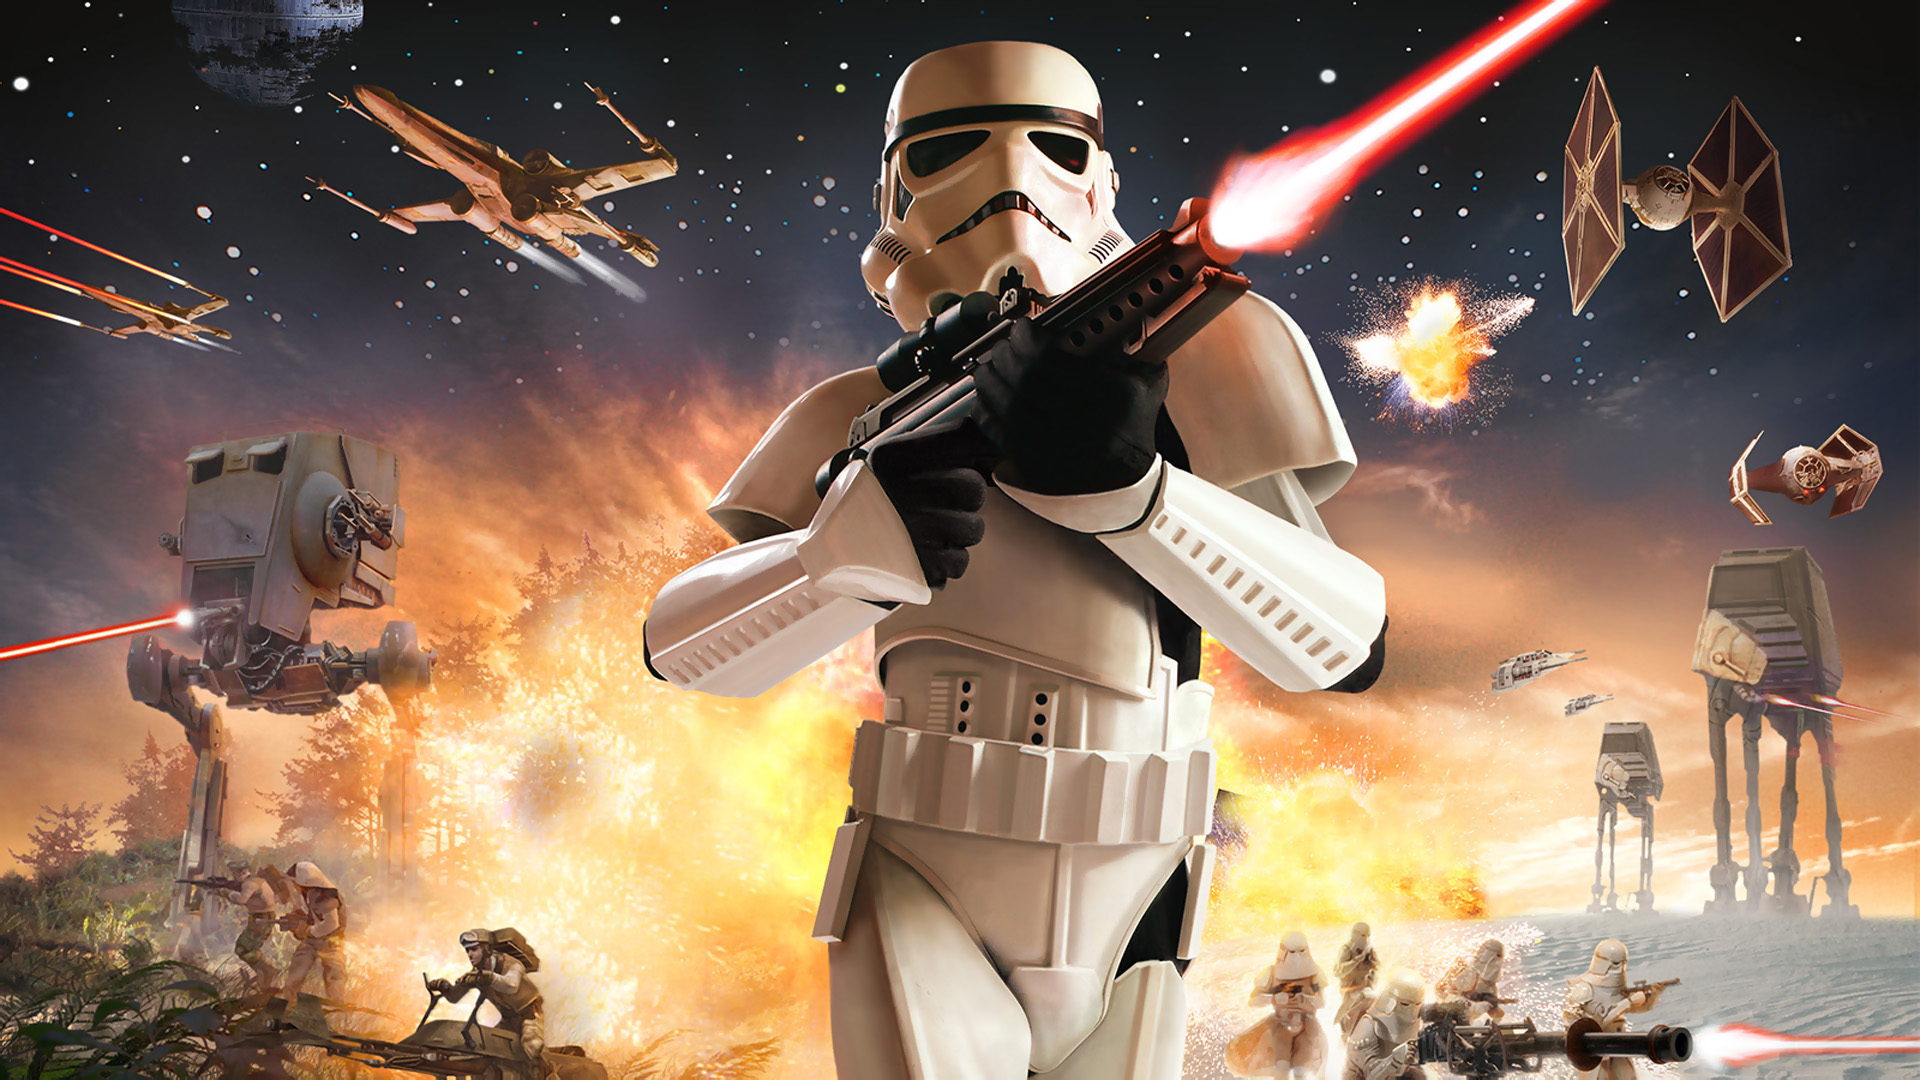 stormtrooper, video game, star wars: battlefront, at at walker, x wing, star wars